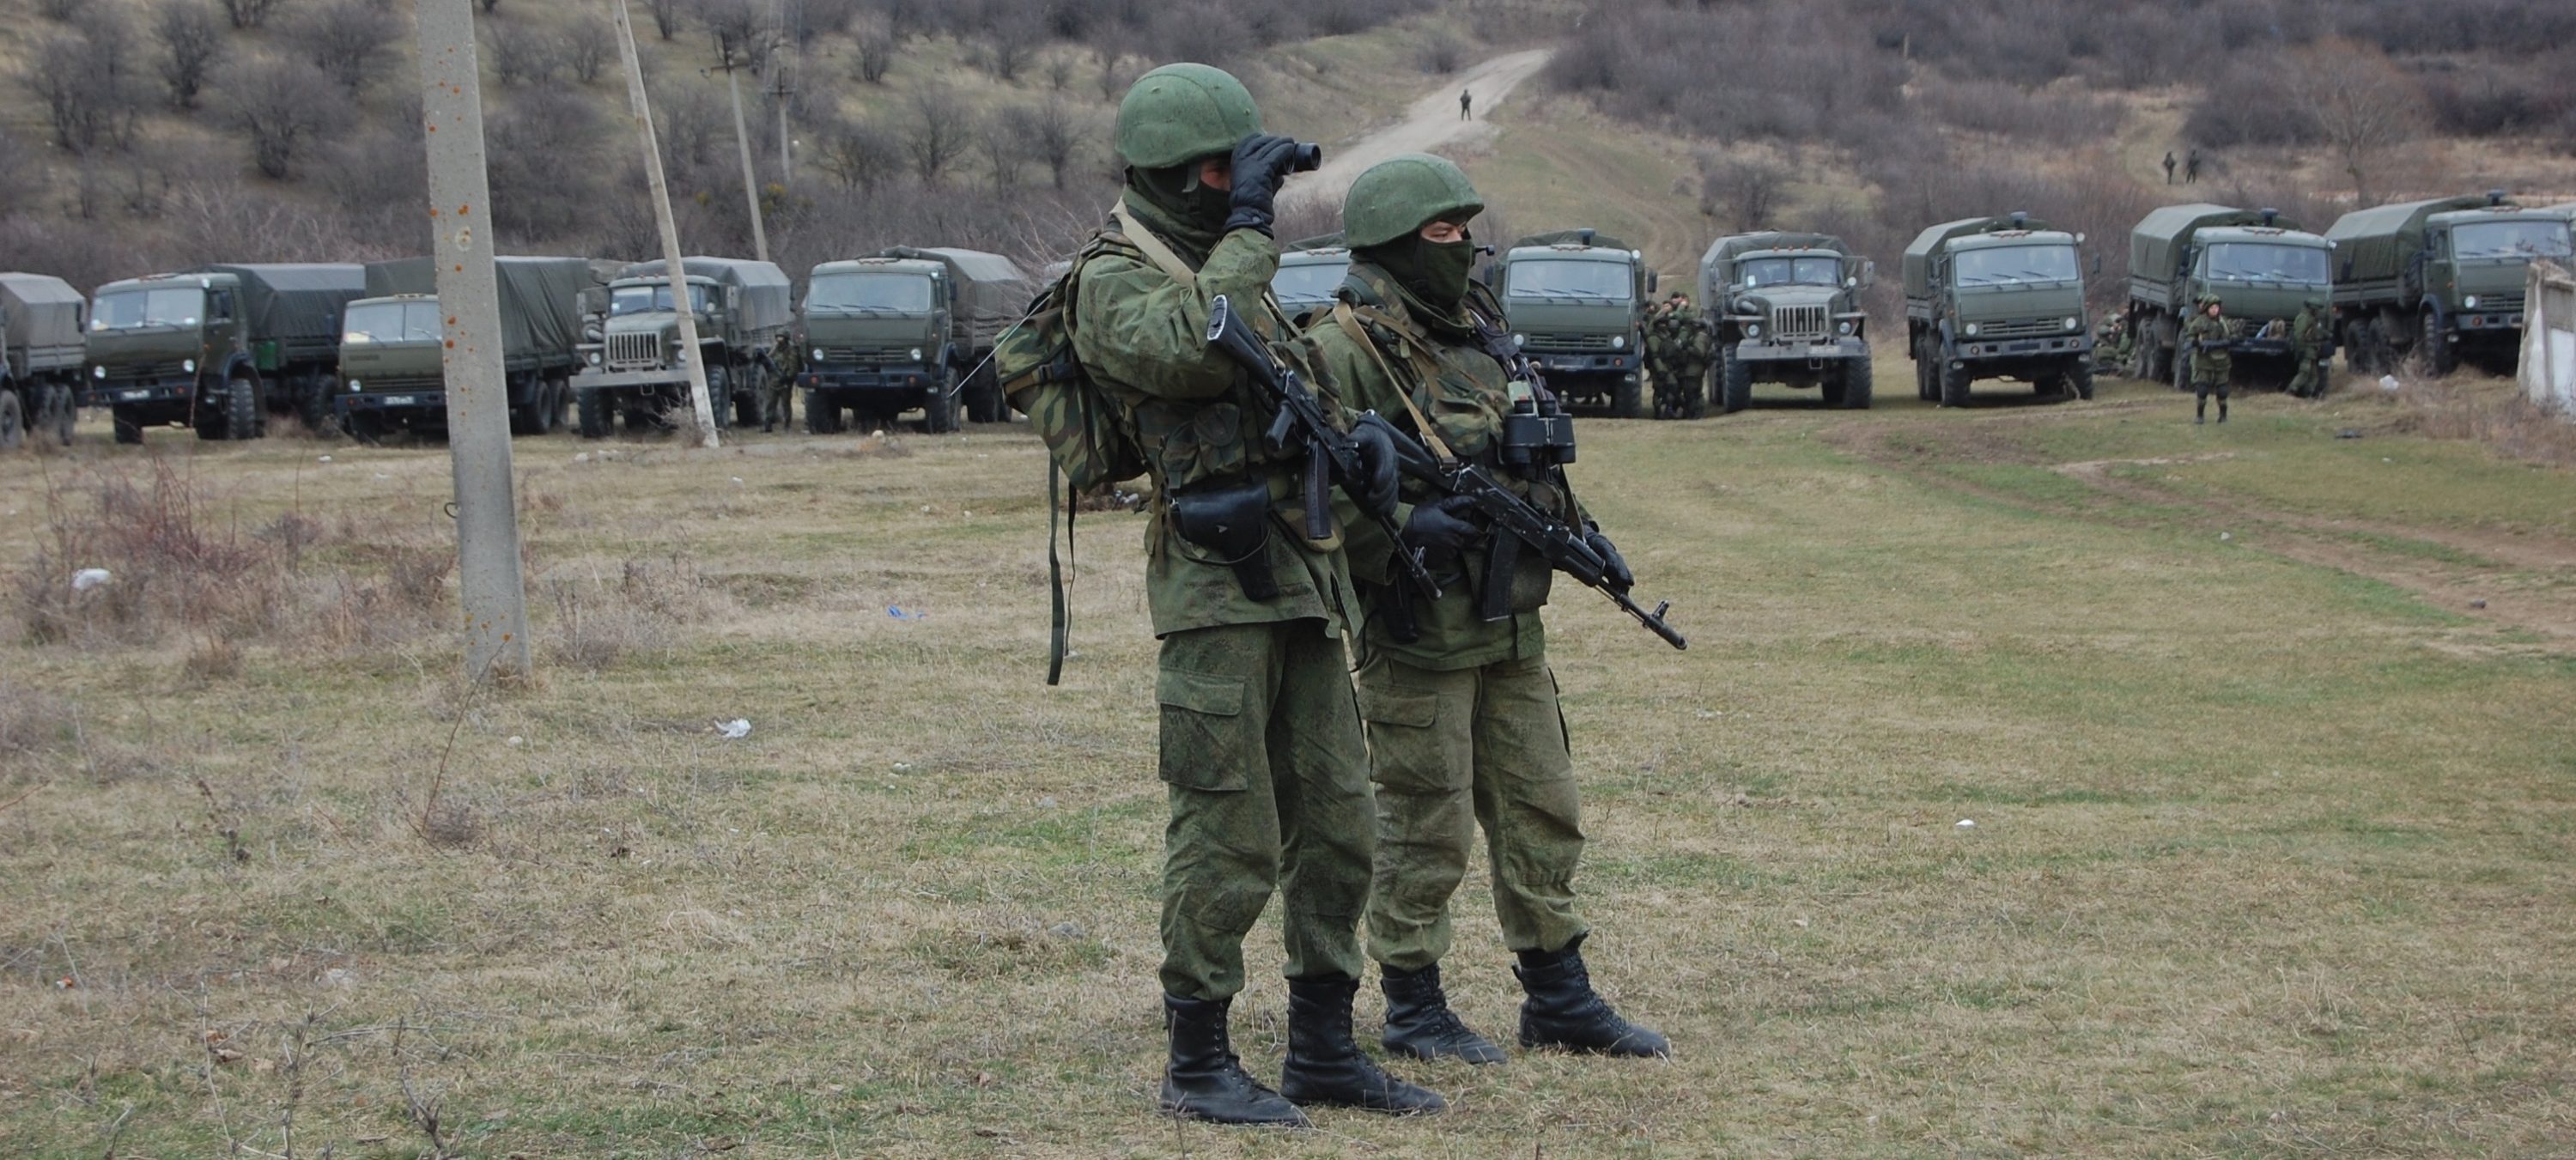 “Plausible Deniability” in Russia’s Hybrid War in Ukraine